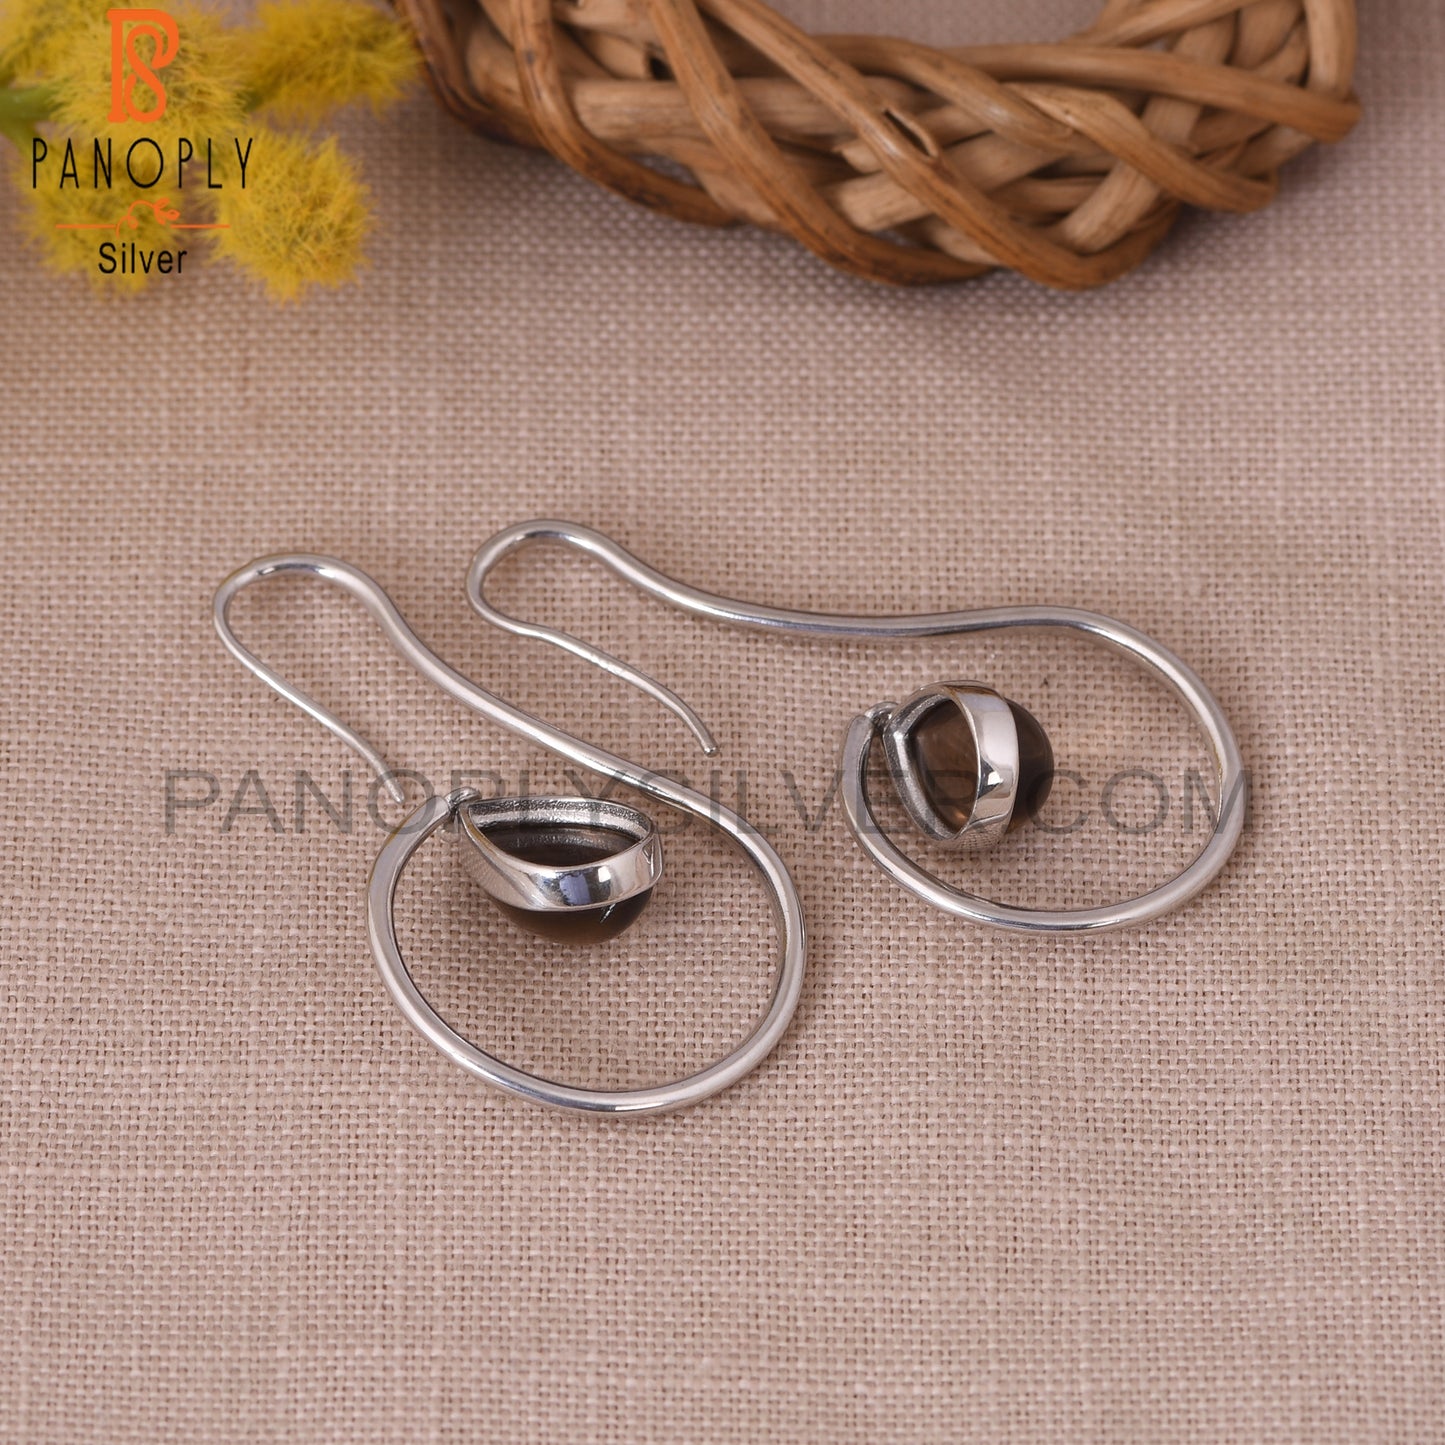 Spiral Earrings 925 Sterling Silver Smoky Quartz Jewelry